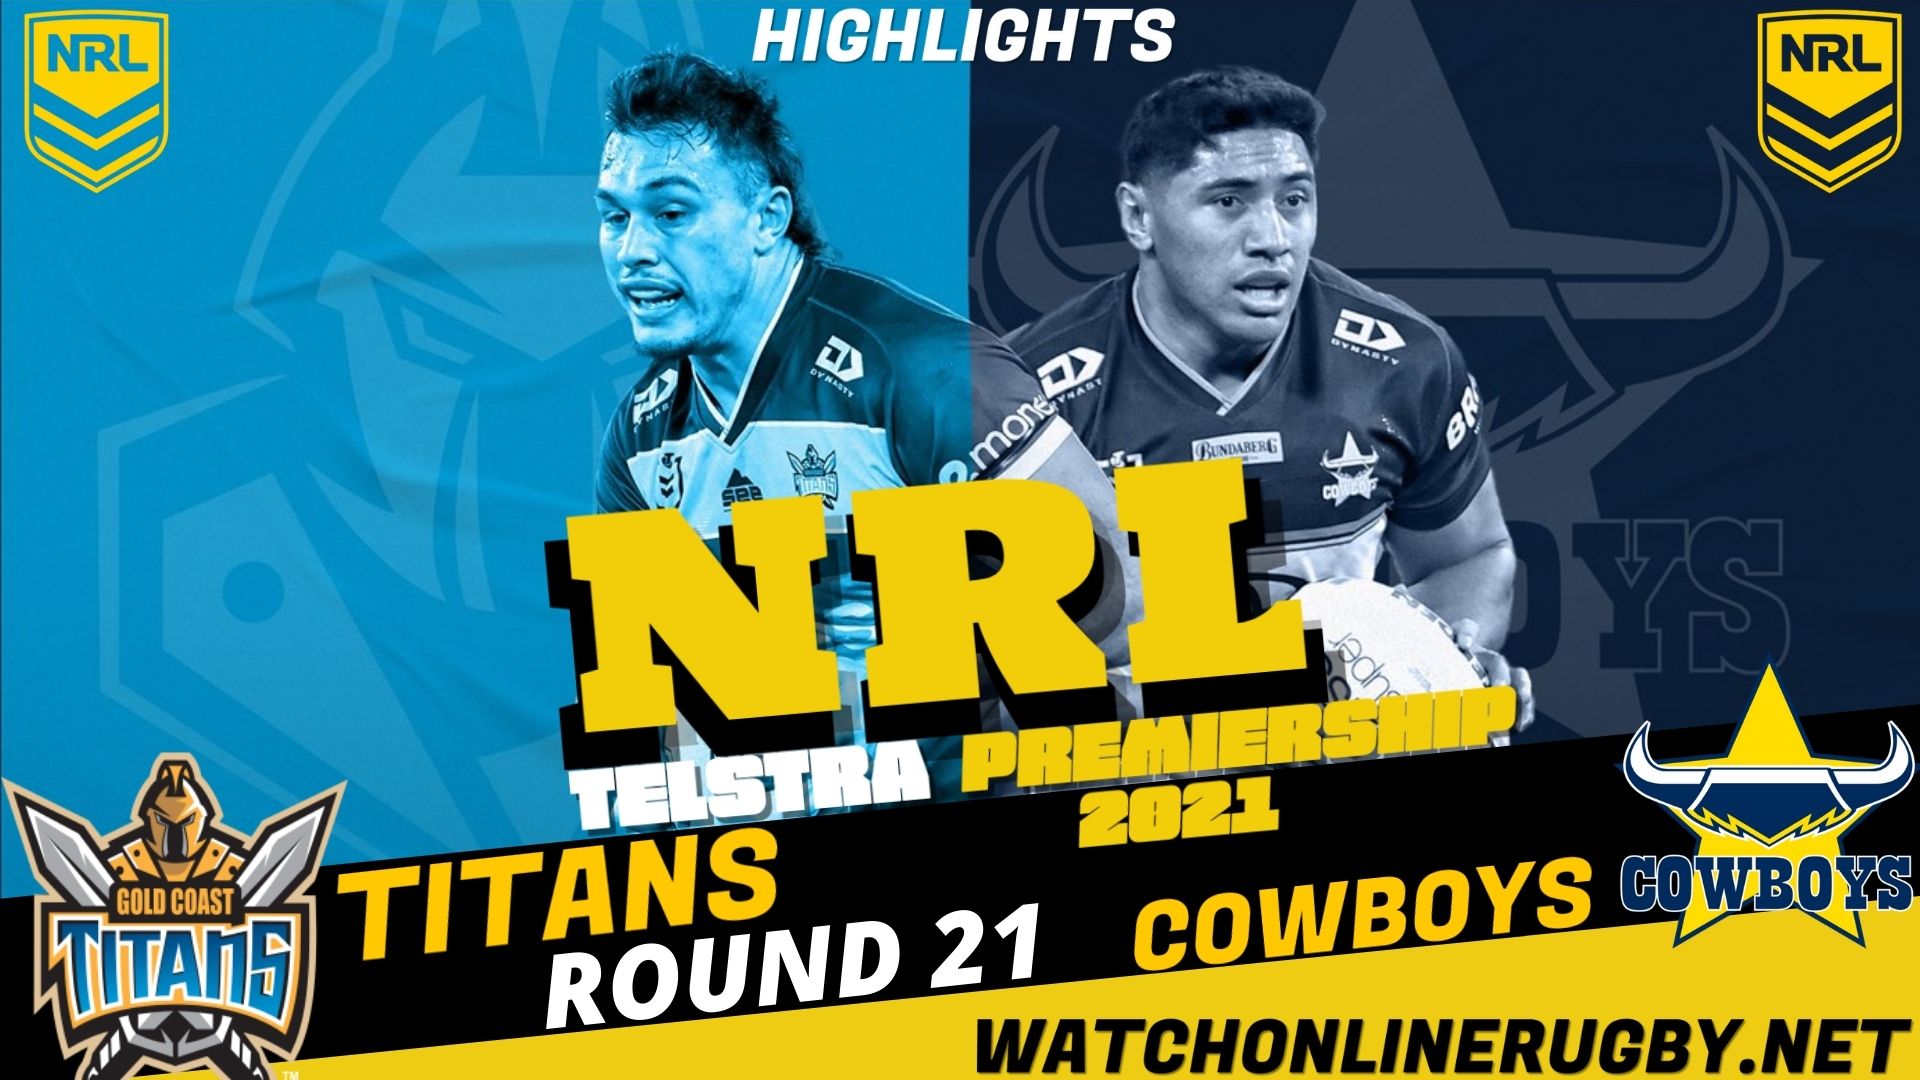 Titans Vs Cowboys Highlights RD 21 NRL Rugby